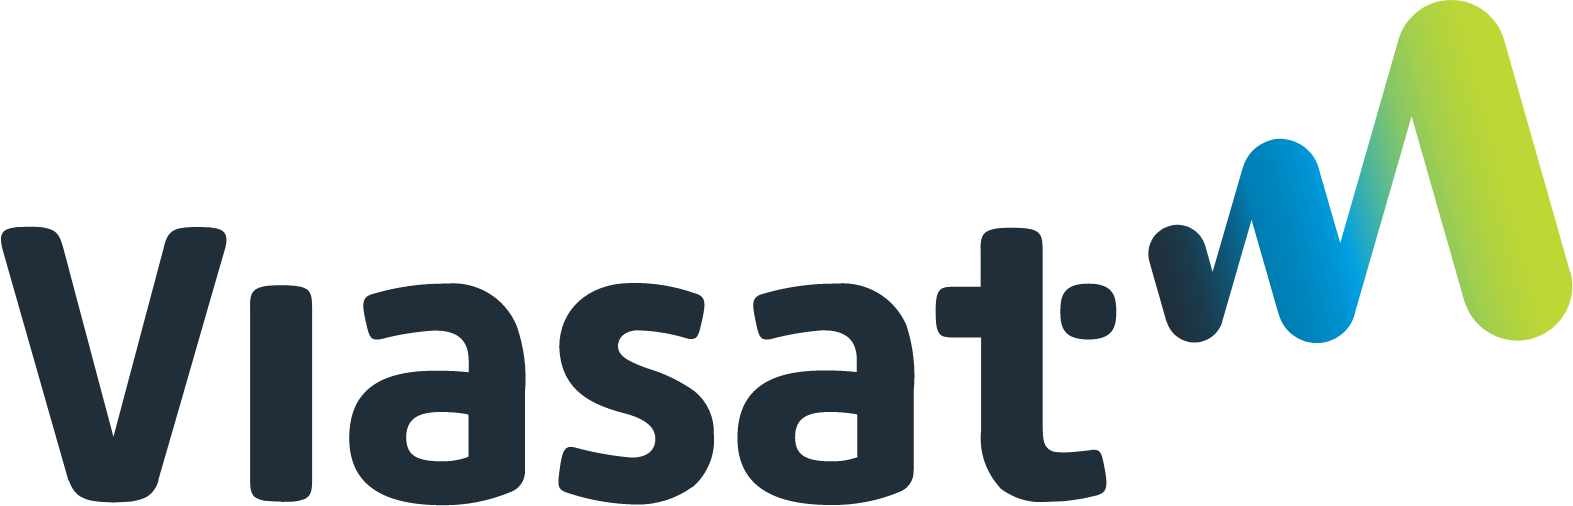 ViaSat logo large (transparent PNG)